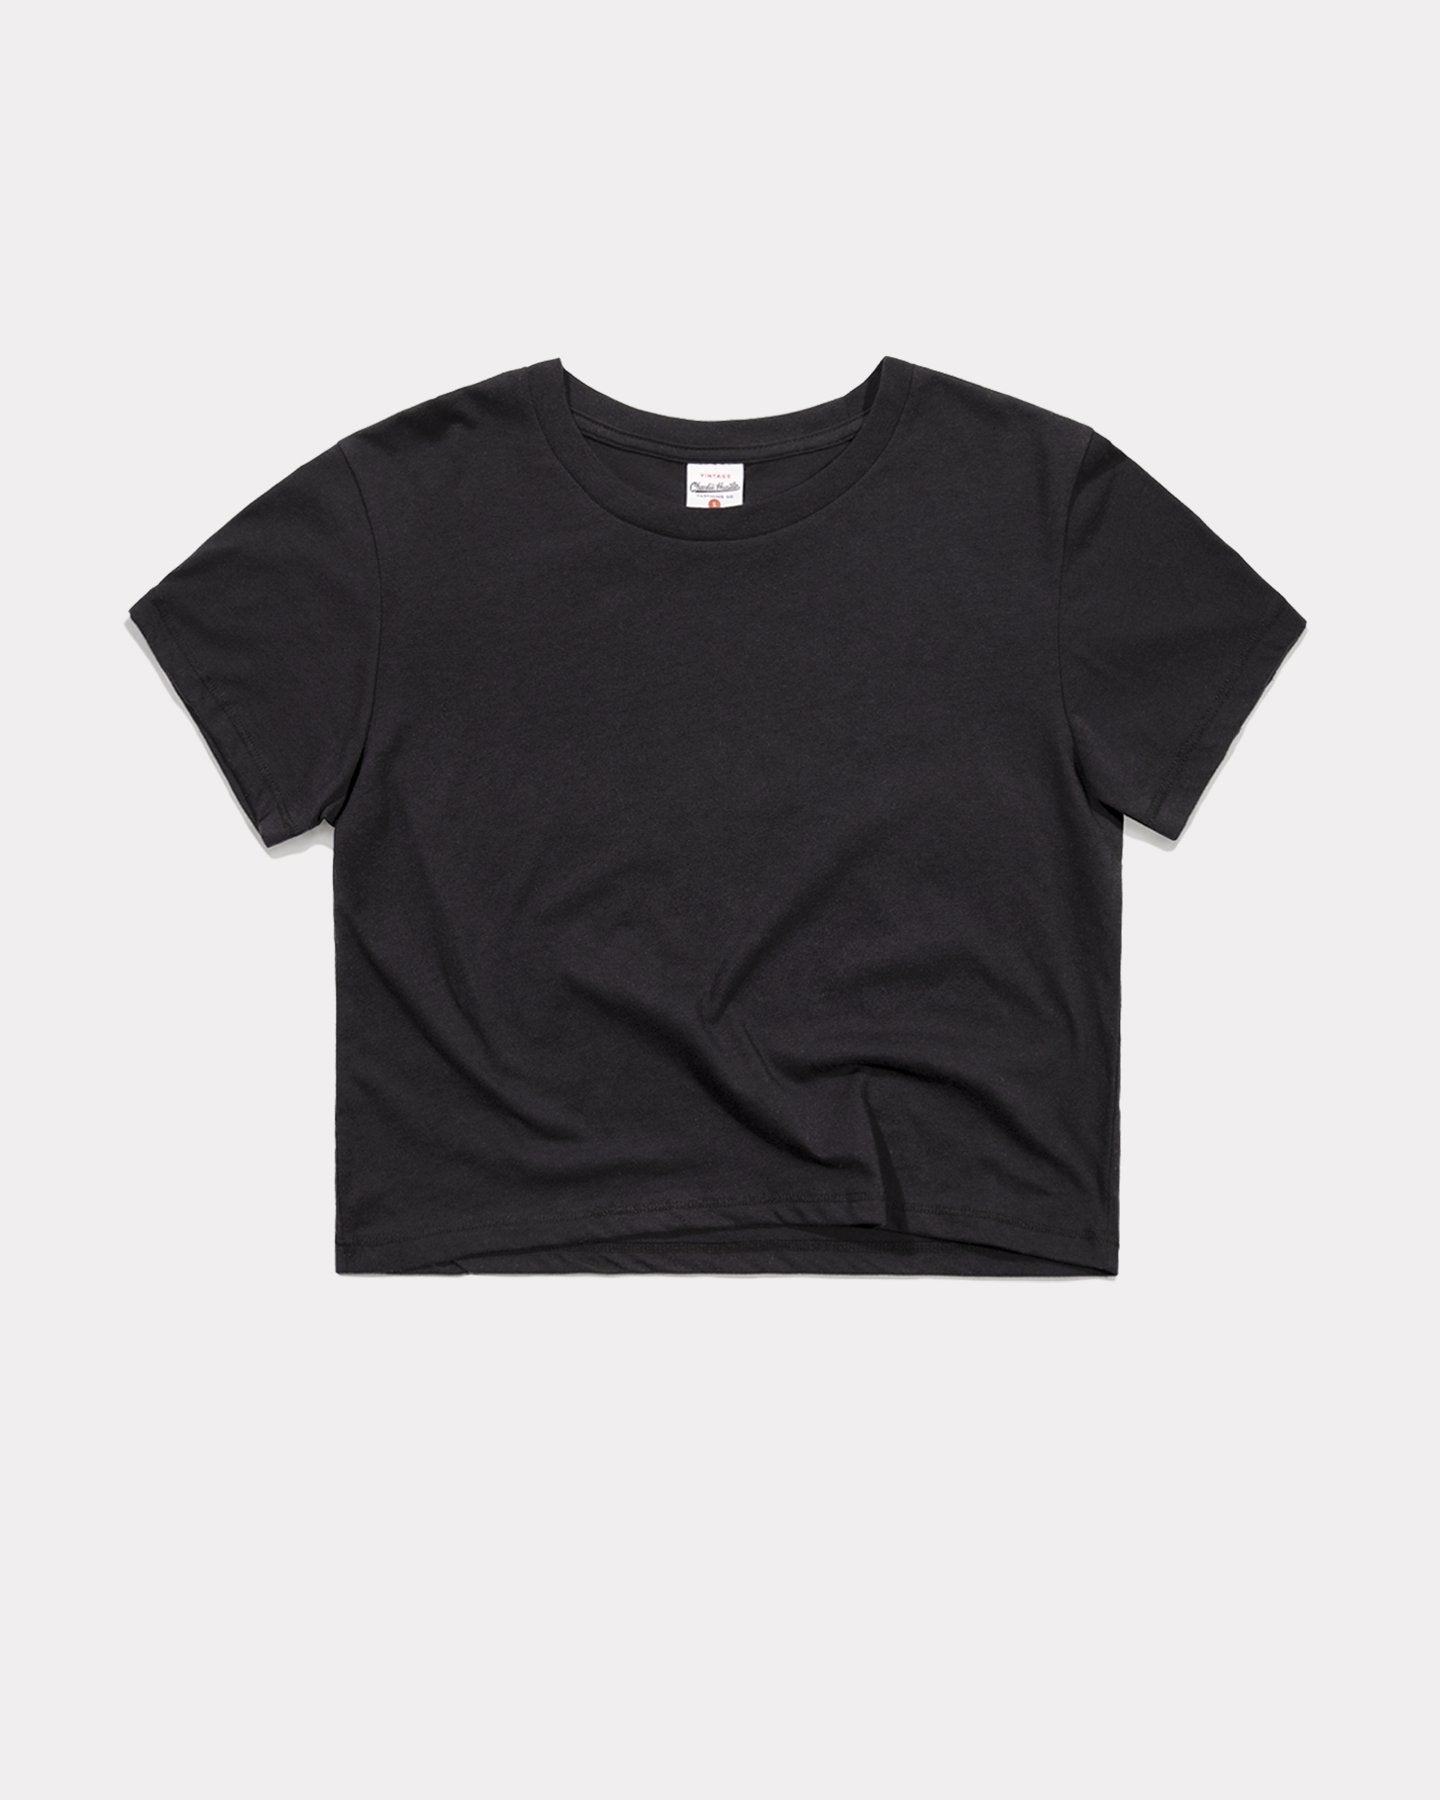 Women's Essential Black Vintage Crop Top T-Shirt | CHARLIE HUSTLE